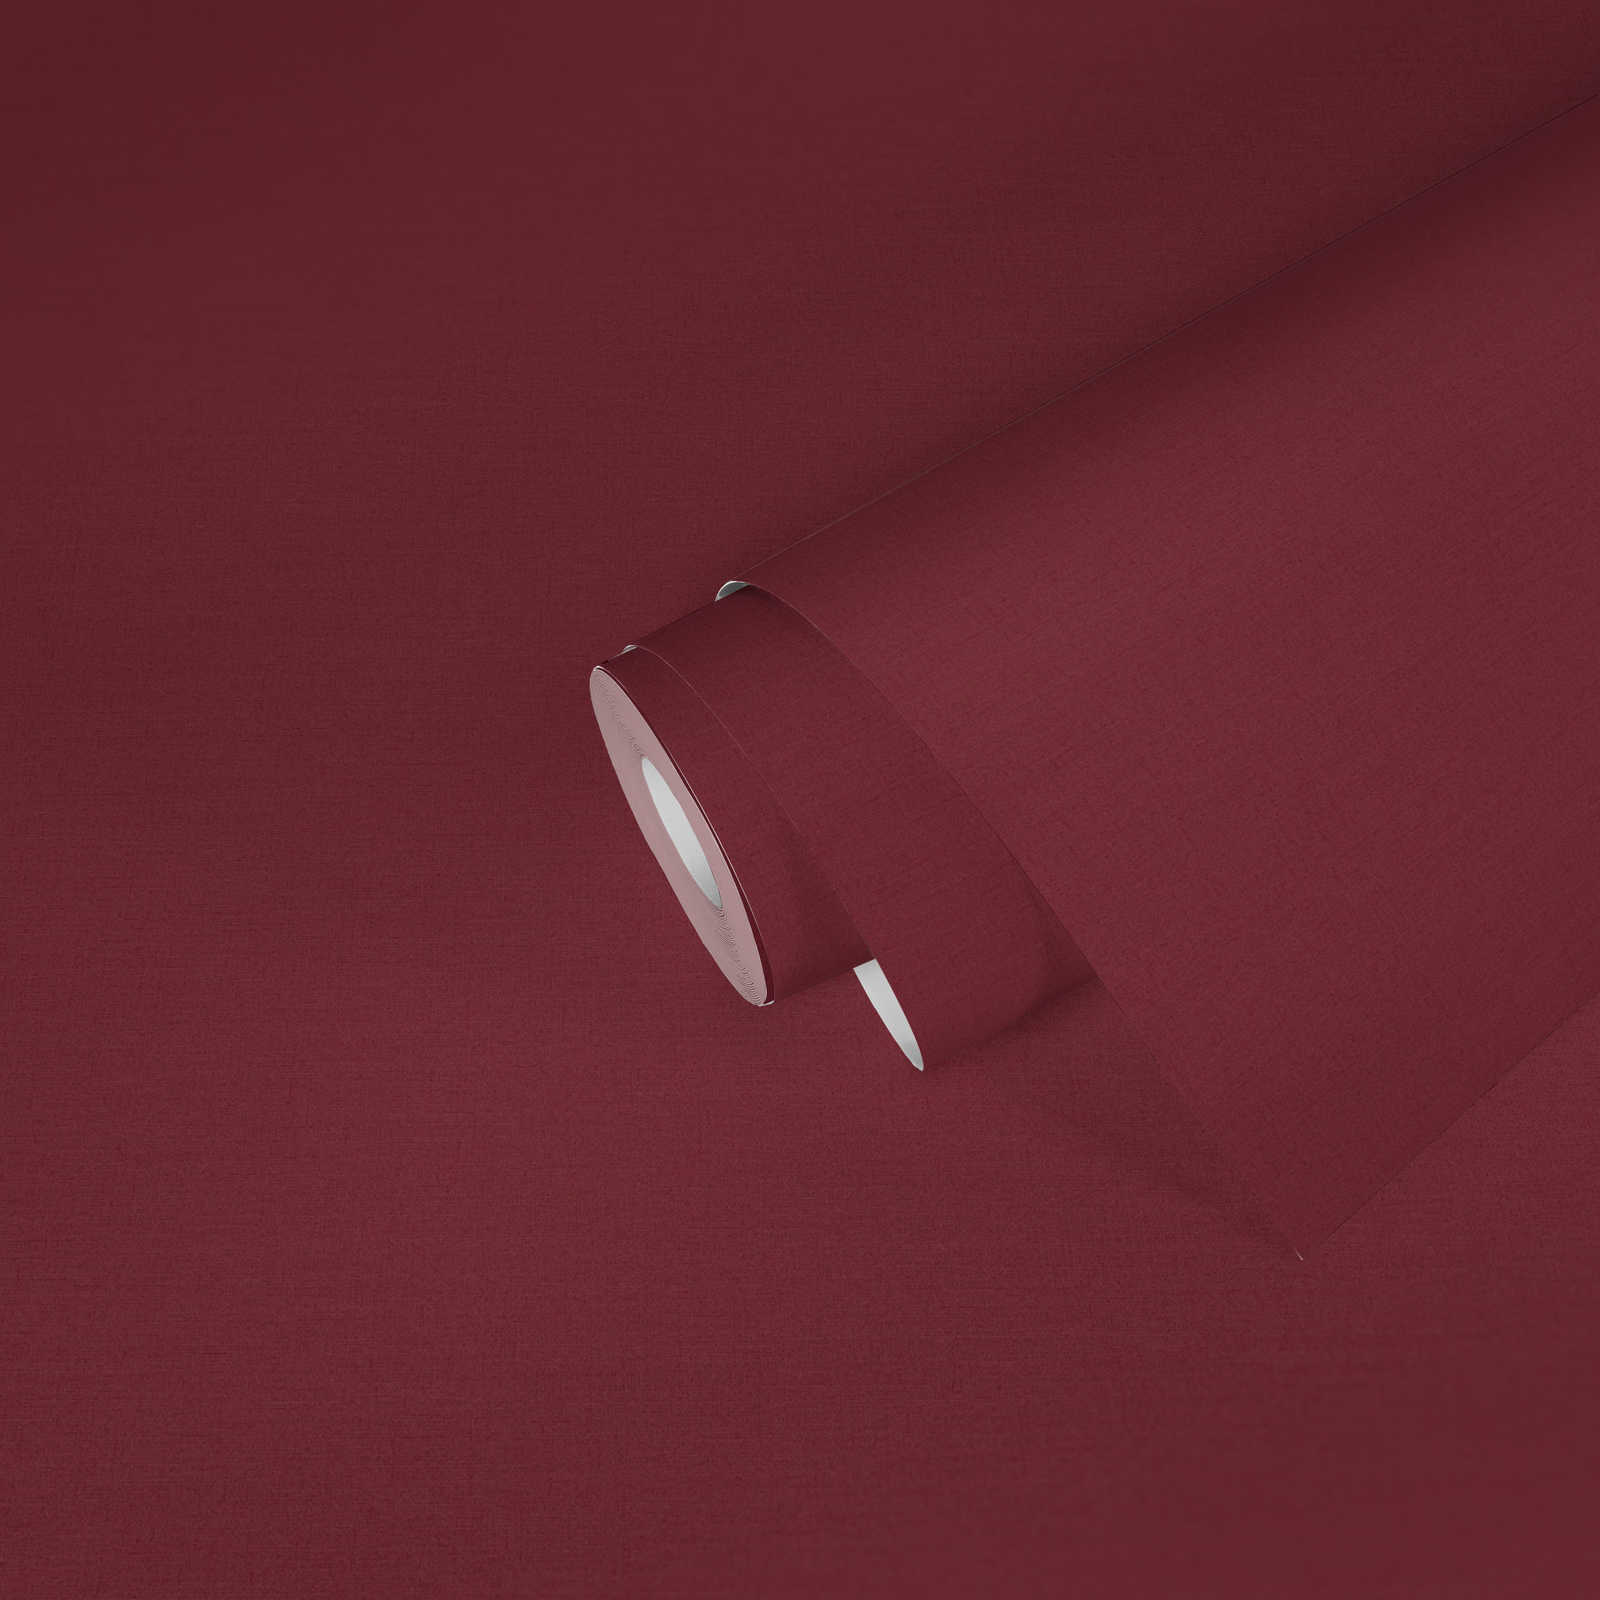             Unitapete in Textil-Optik – Rot
        